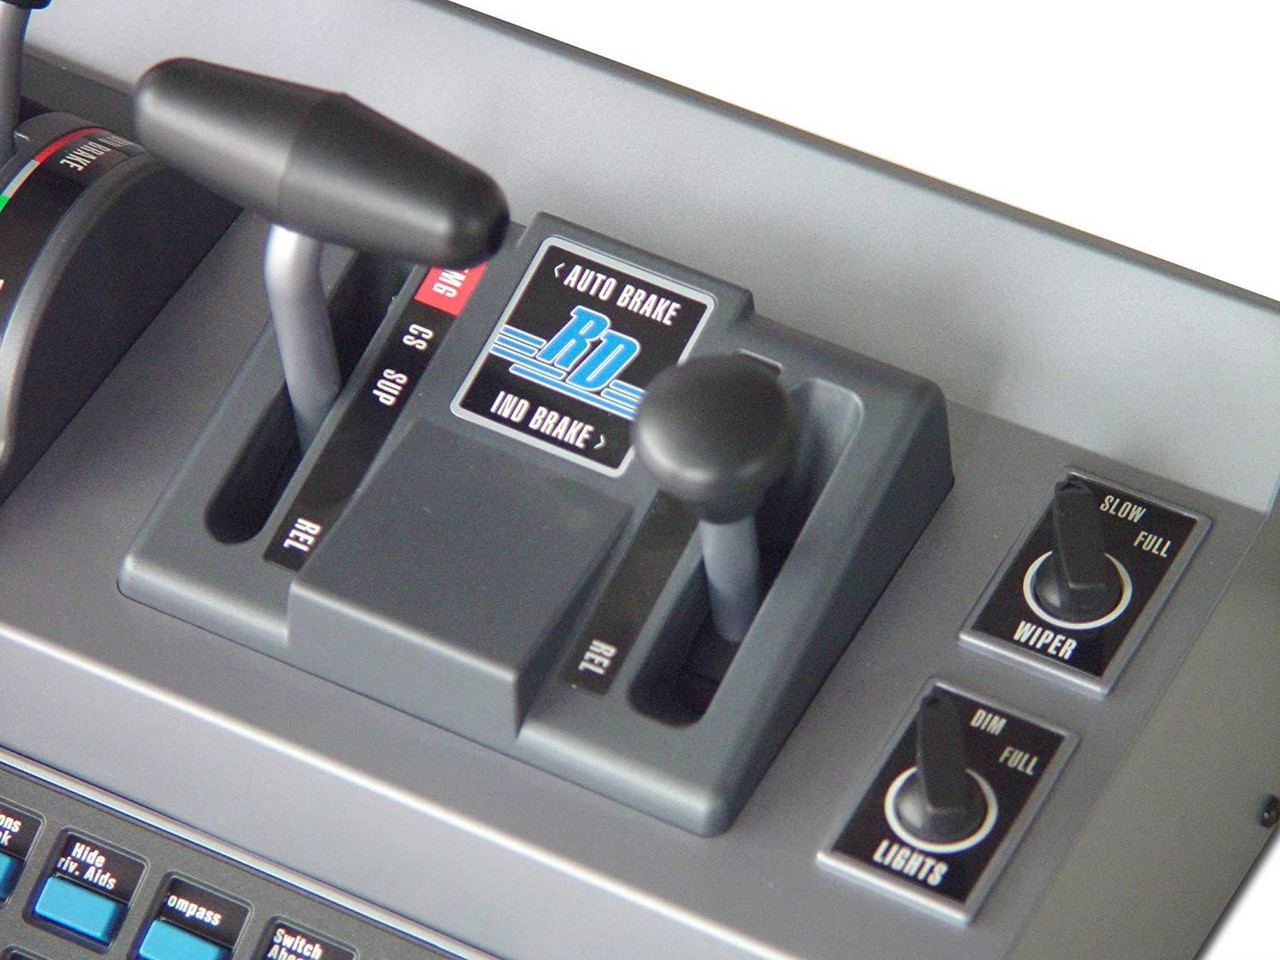 RailDriver USB Desktop Train Cab Controller RD-91-MDT-R - Retro Hobby